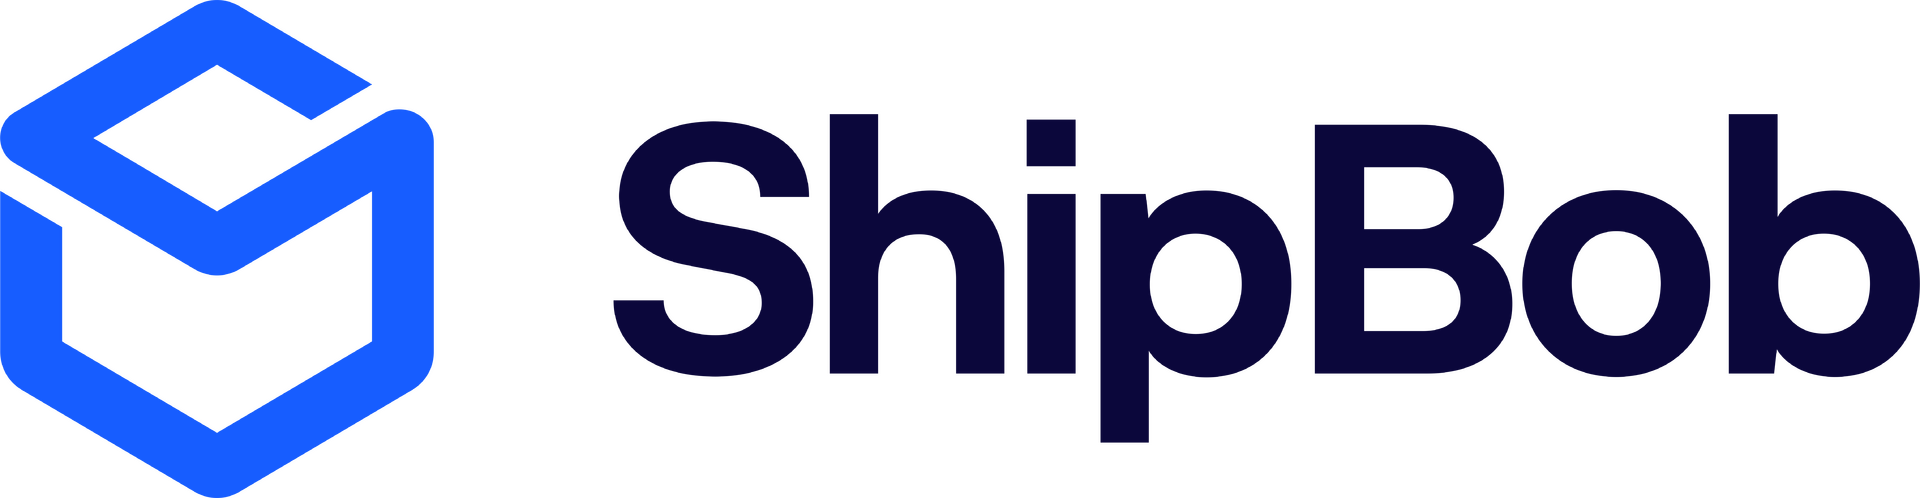 Logotipo ShipBob